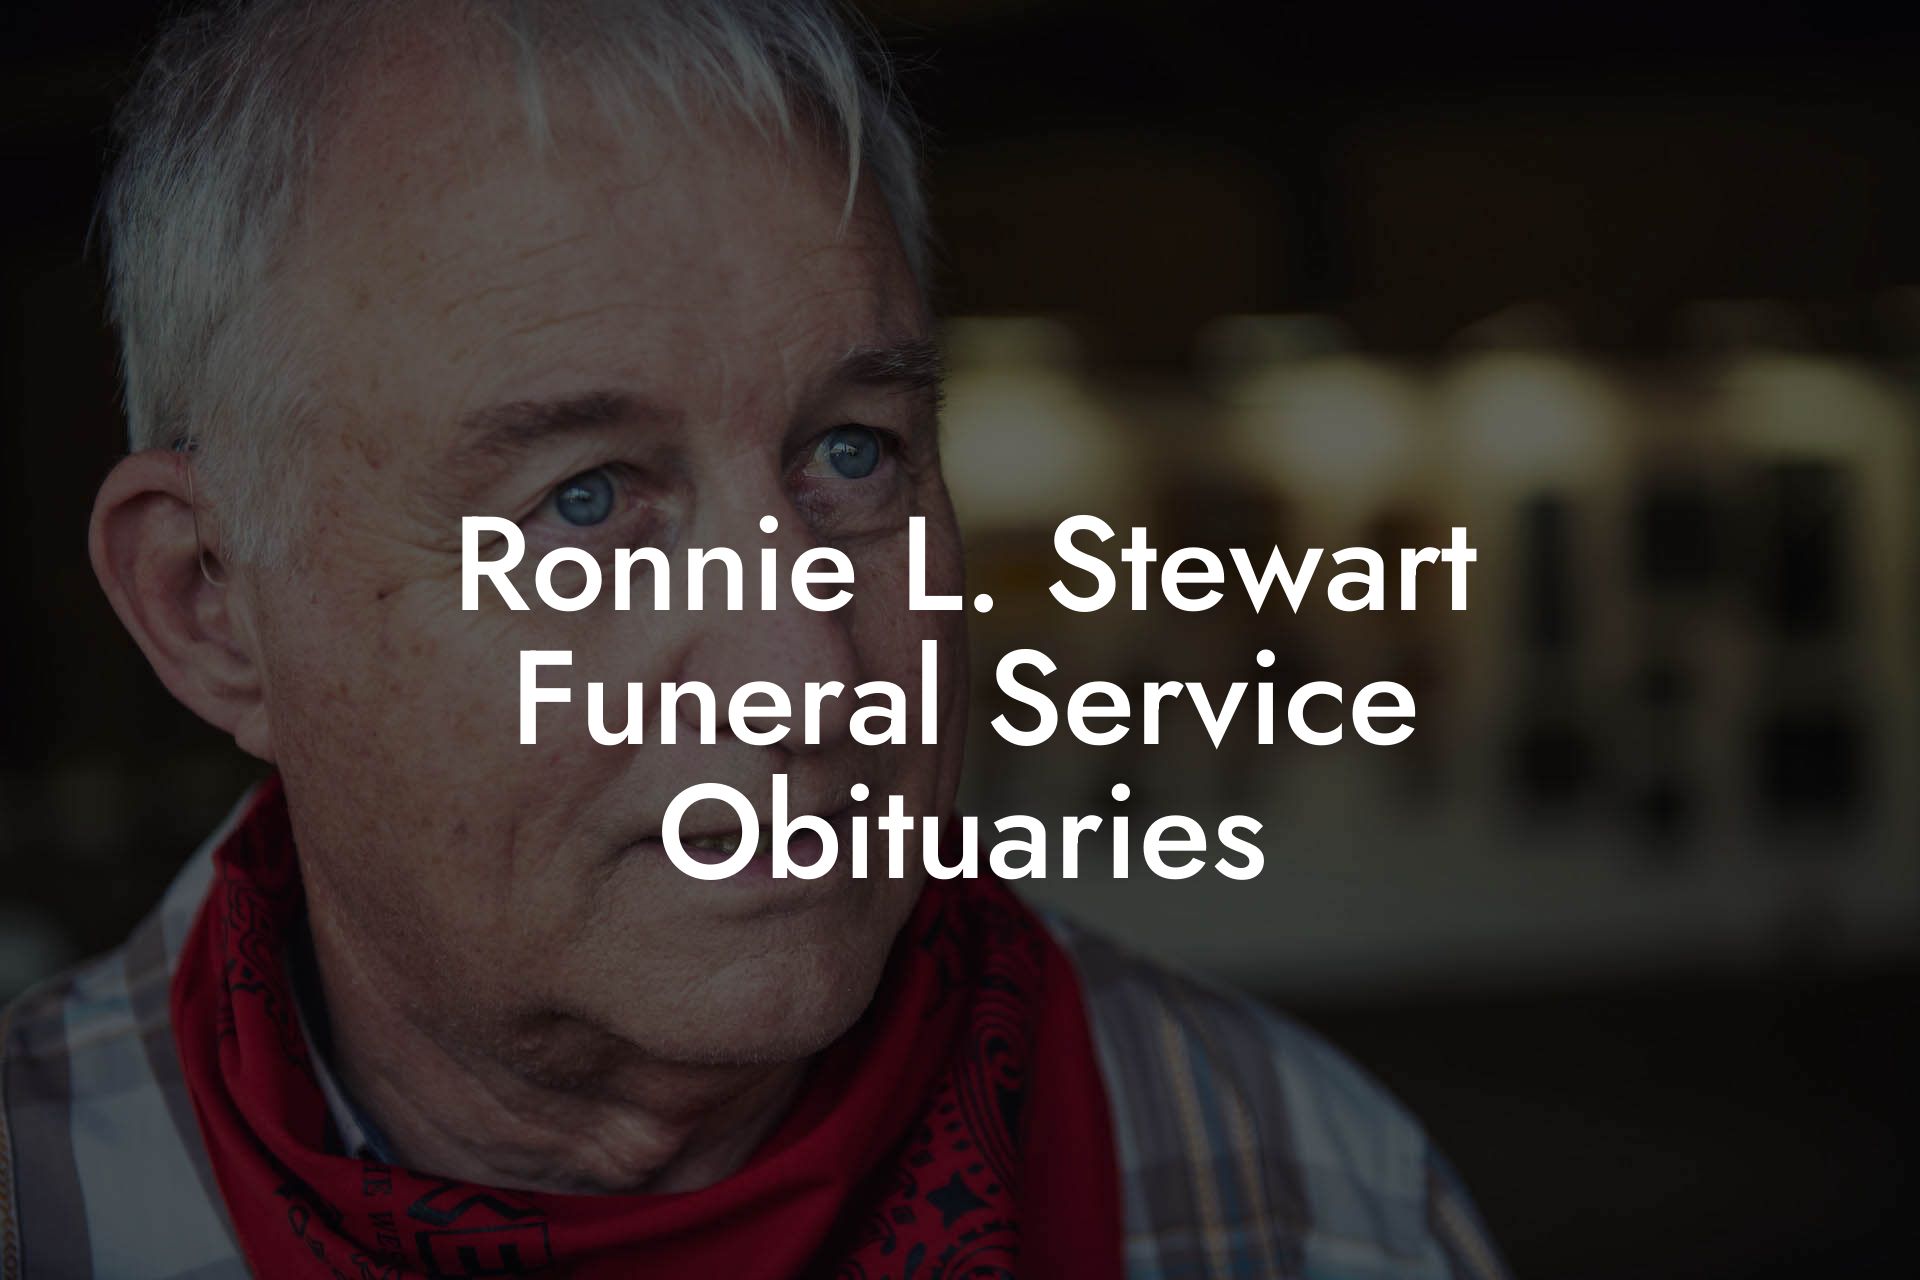 Ronnie L. Stewart Funeral Service Obituaries